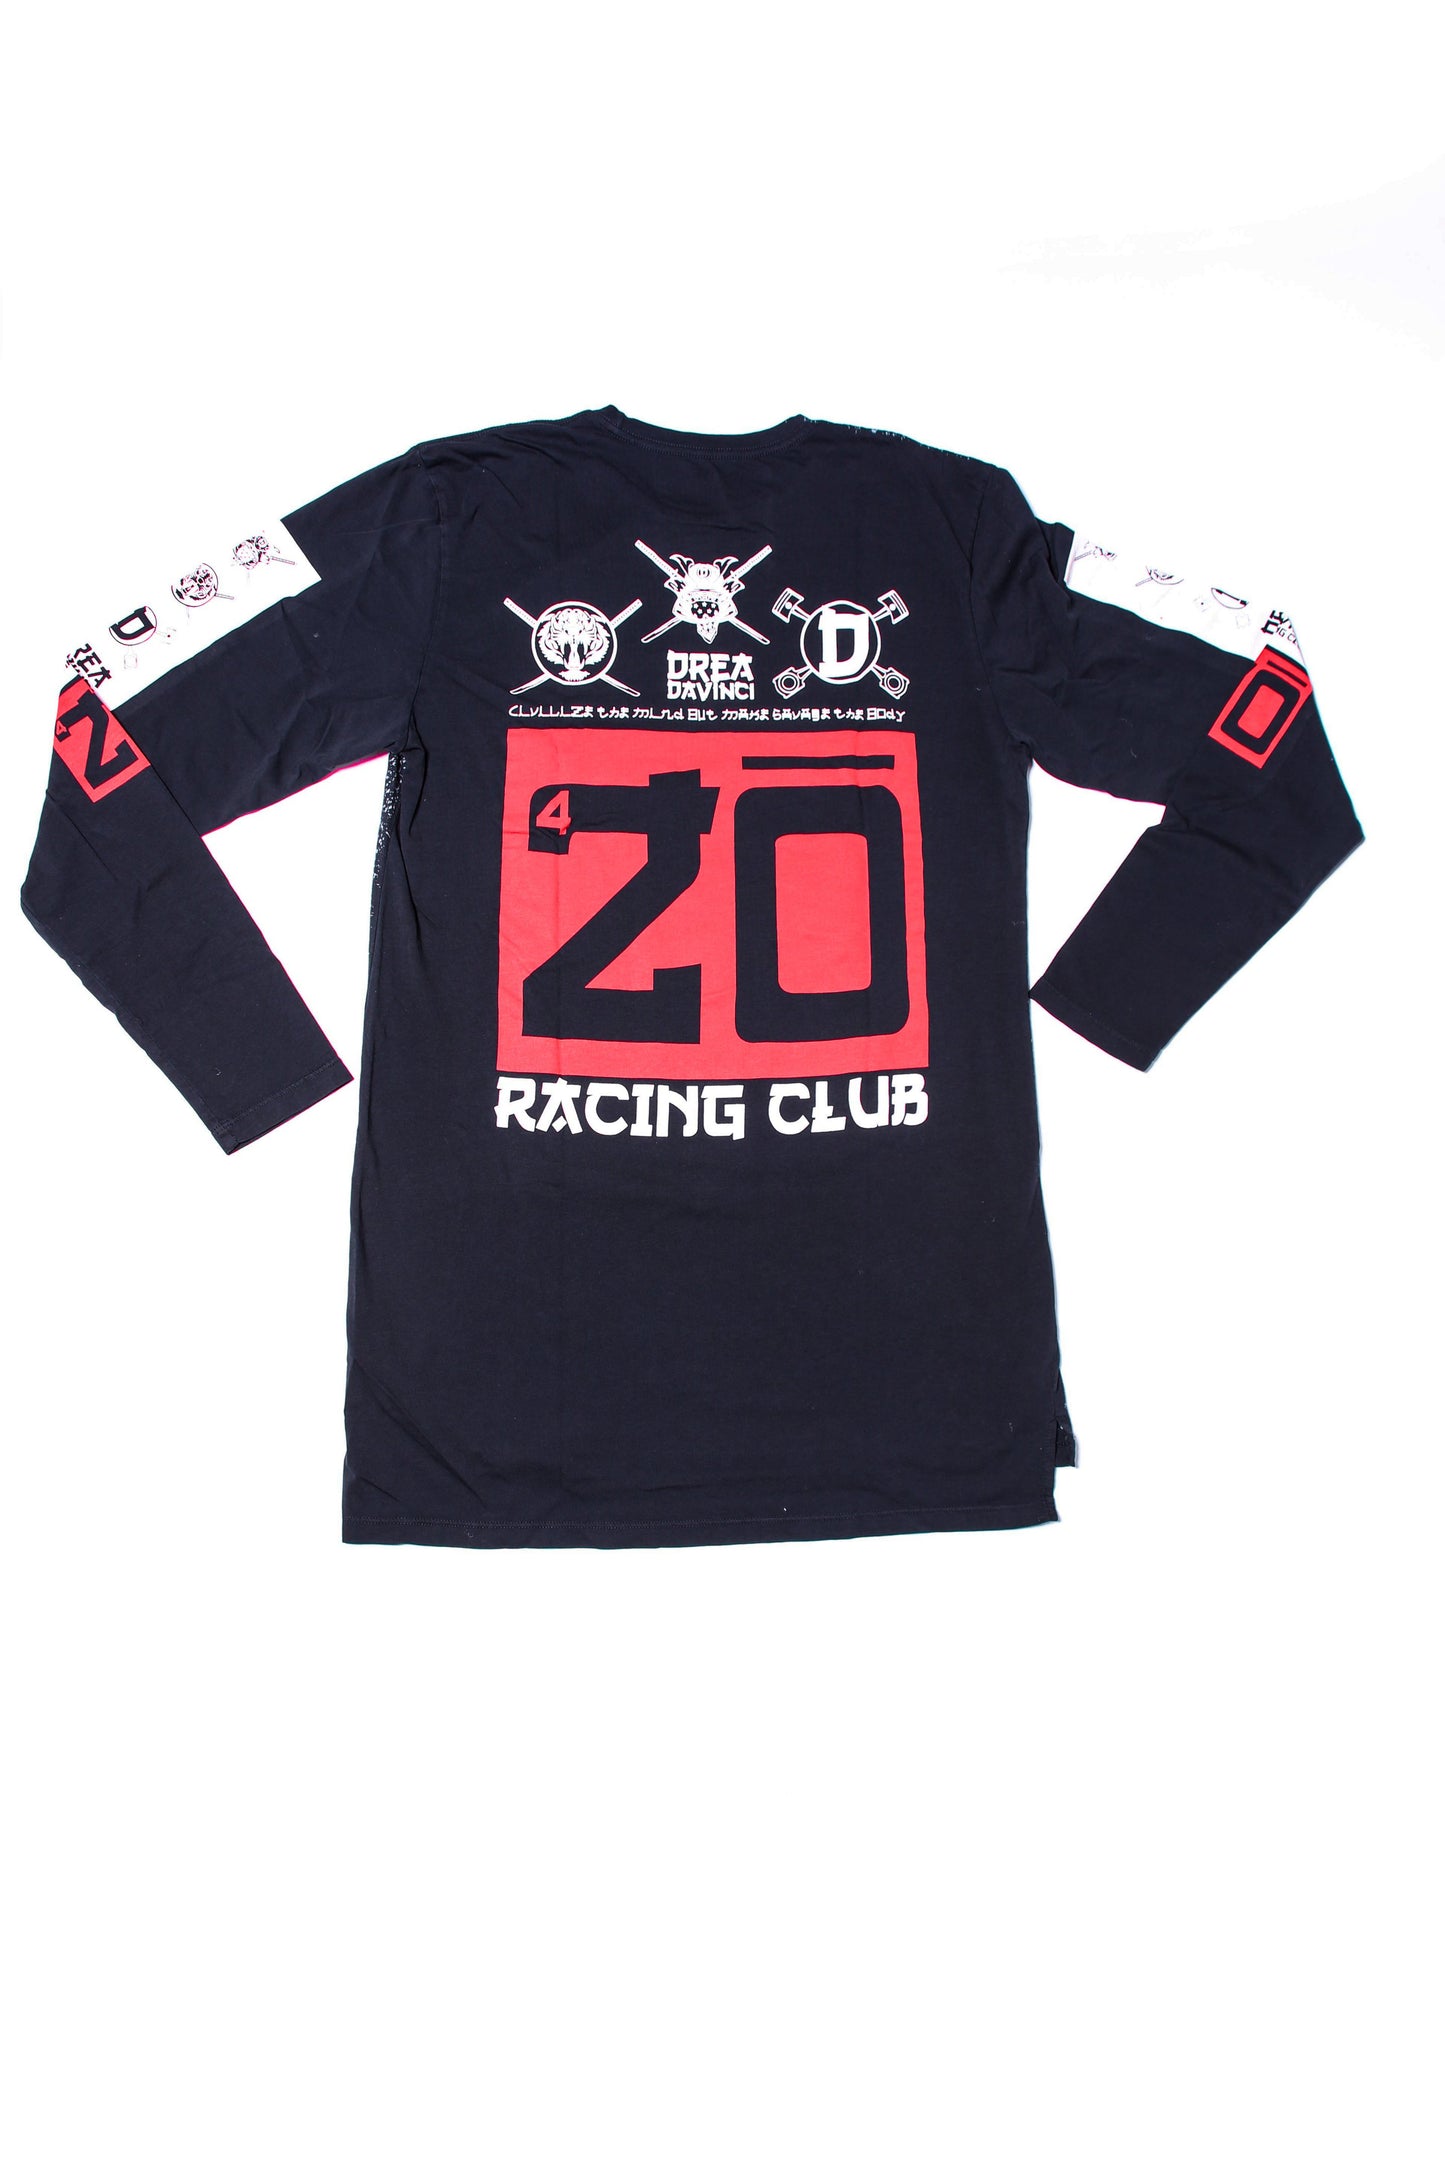 420 Racing Club Long Sleeve Extendo - dreadavinci 